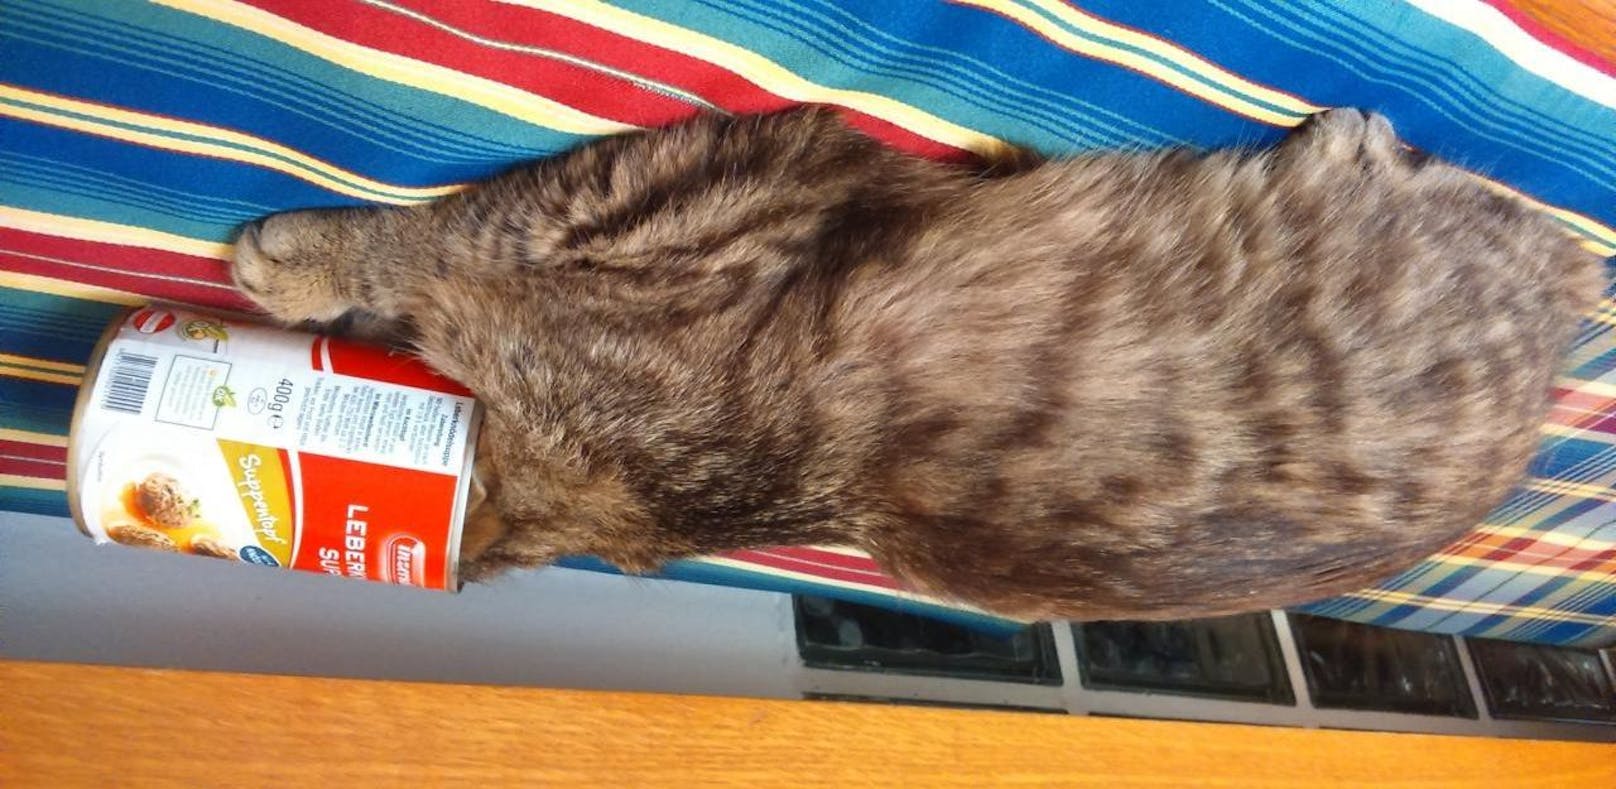 Katze steckt stundenlang in Suppendose fest